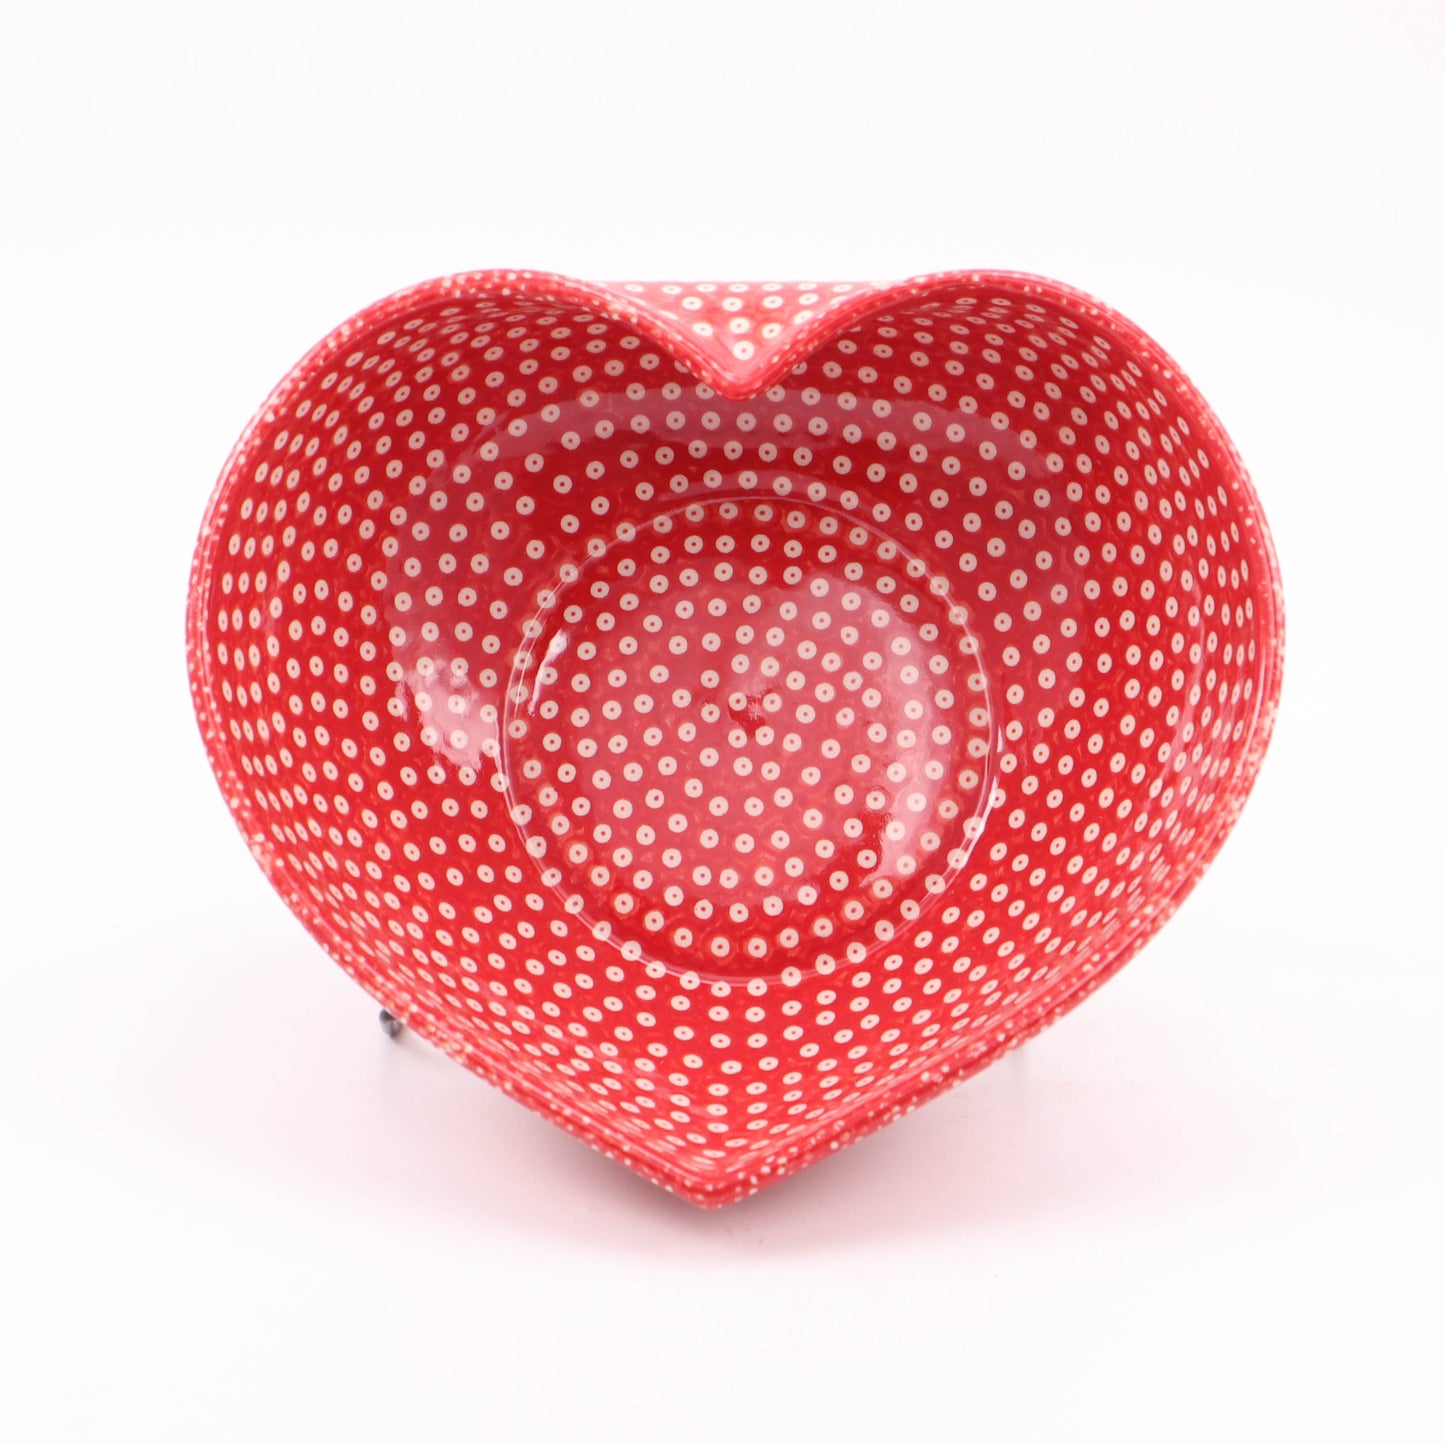 8"x8.5" Heart Bowl. Pattern: Ruby